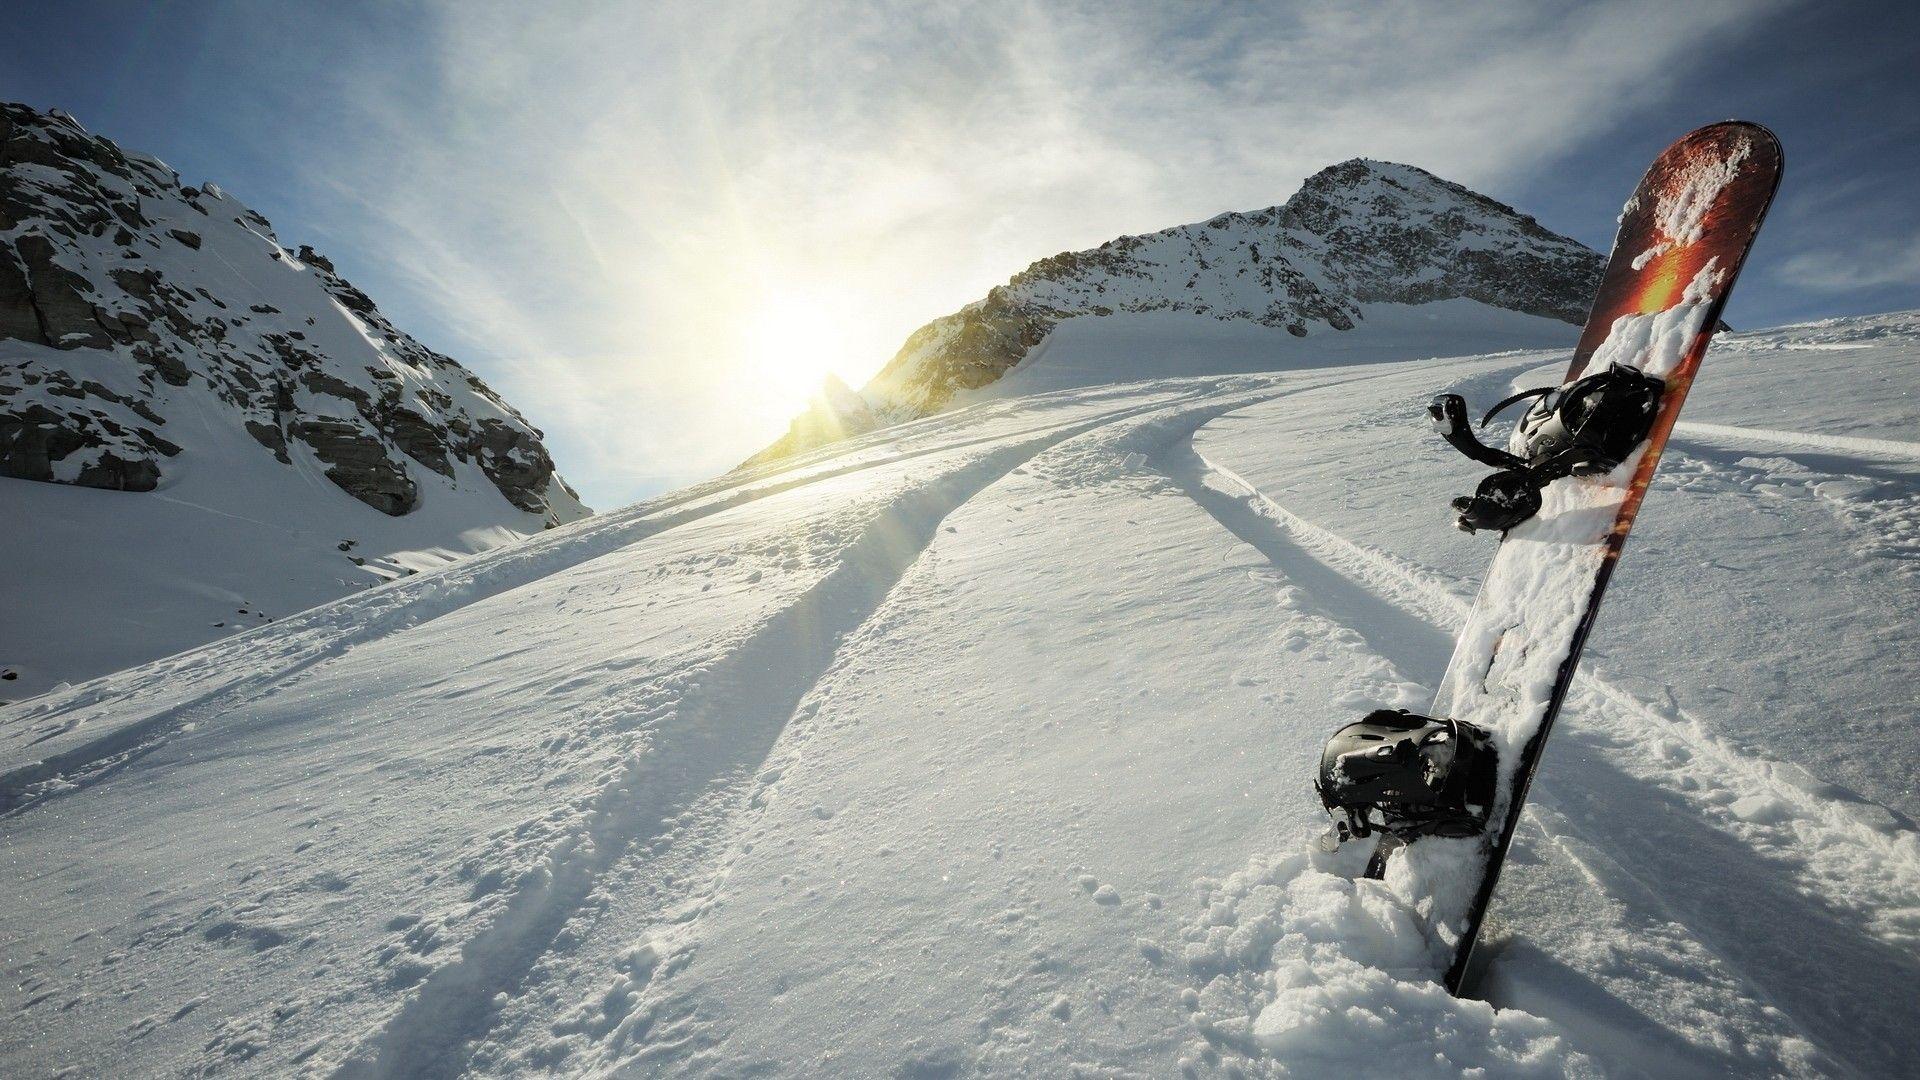 Burton Snowboard Wallpapers Top Free Burton Snowboard Backgrounds Wallpaperaccess